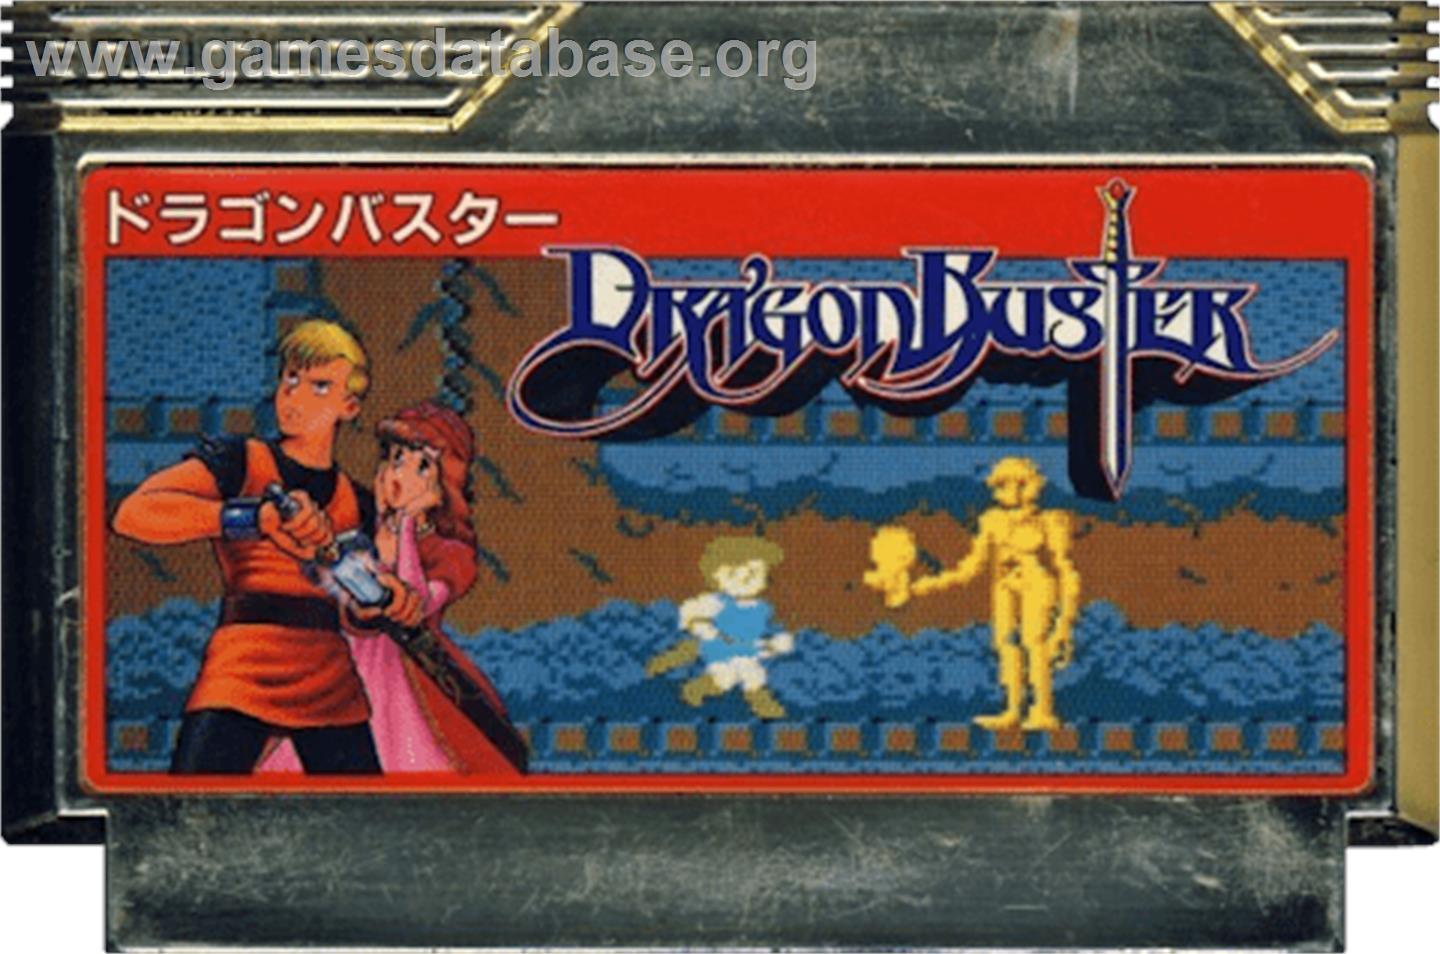 Dragon Buster - Nintendo NES - Artwork - Cartridge